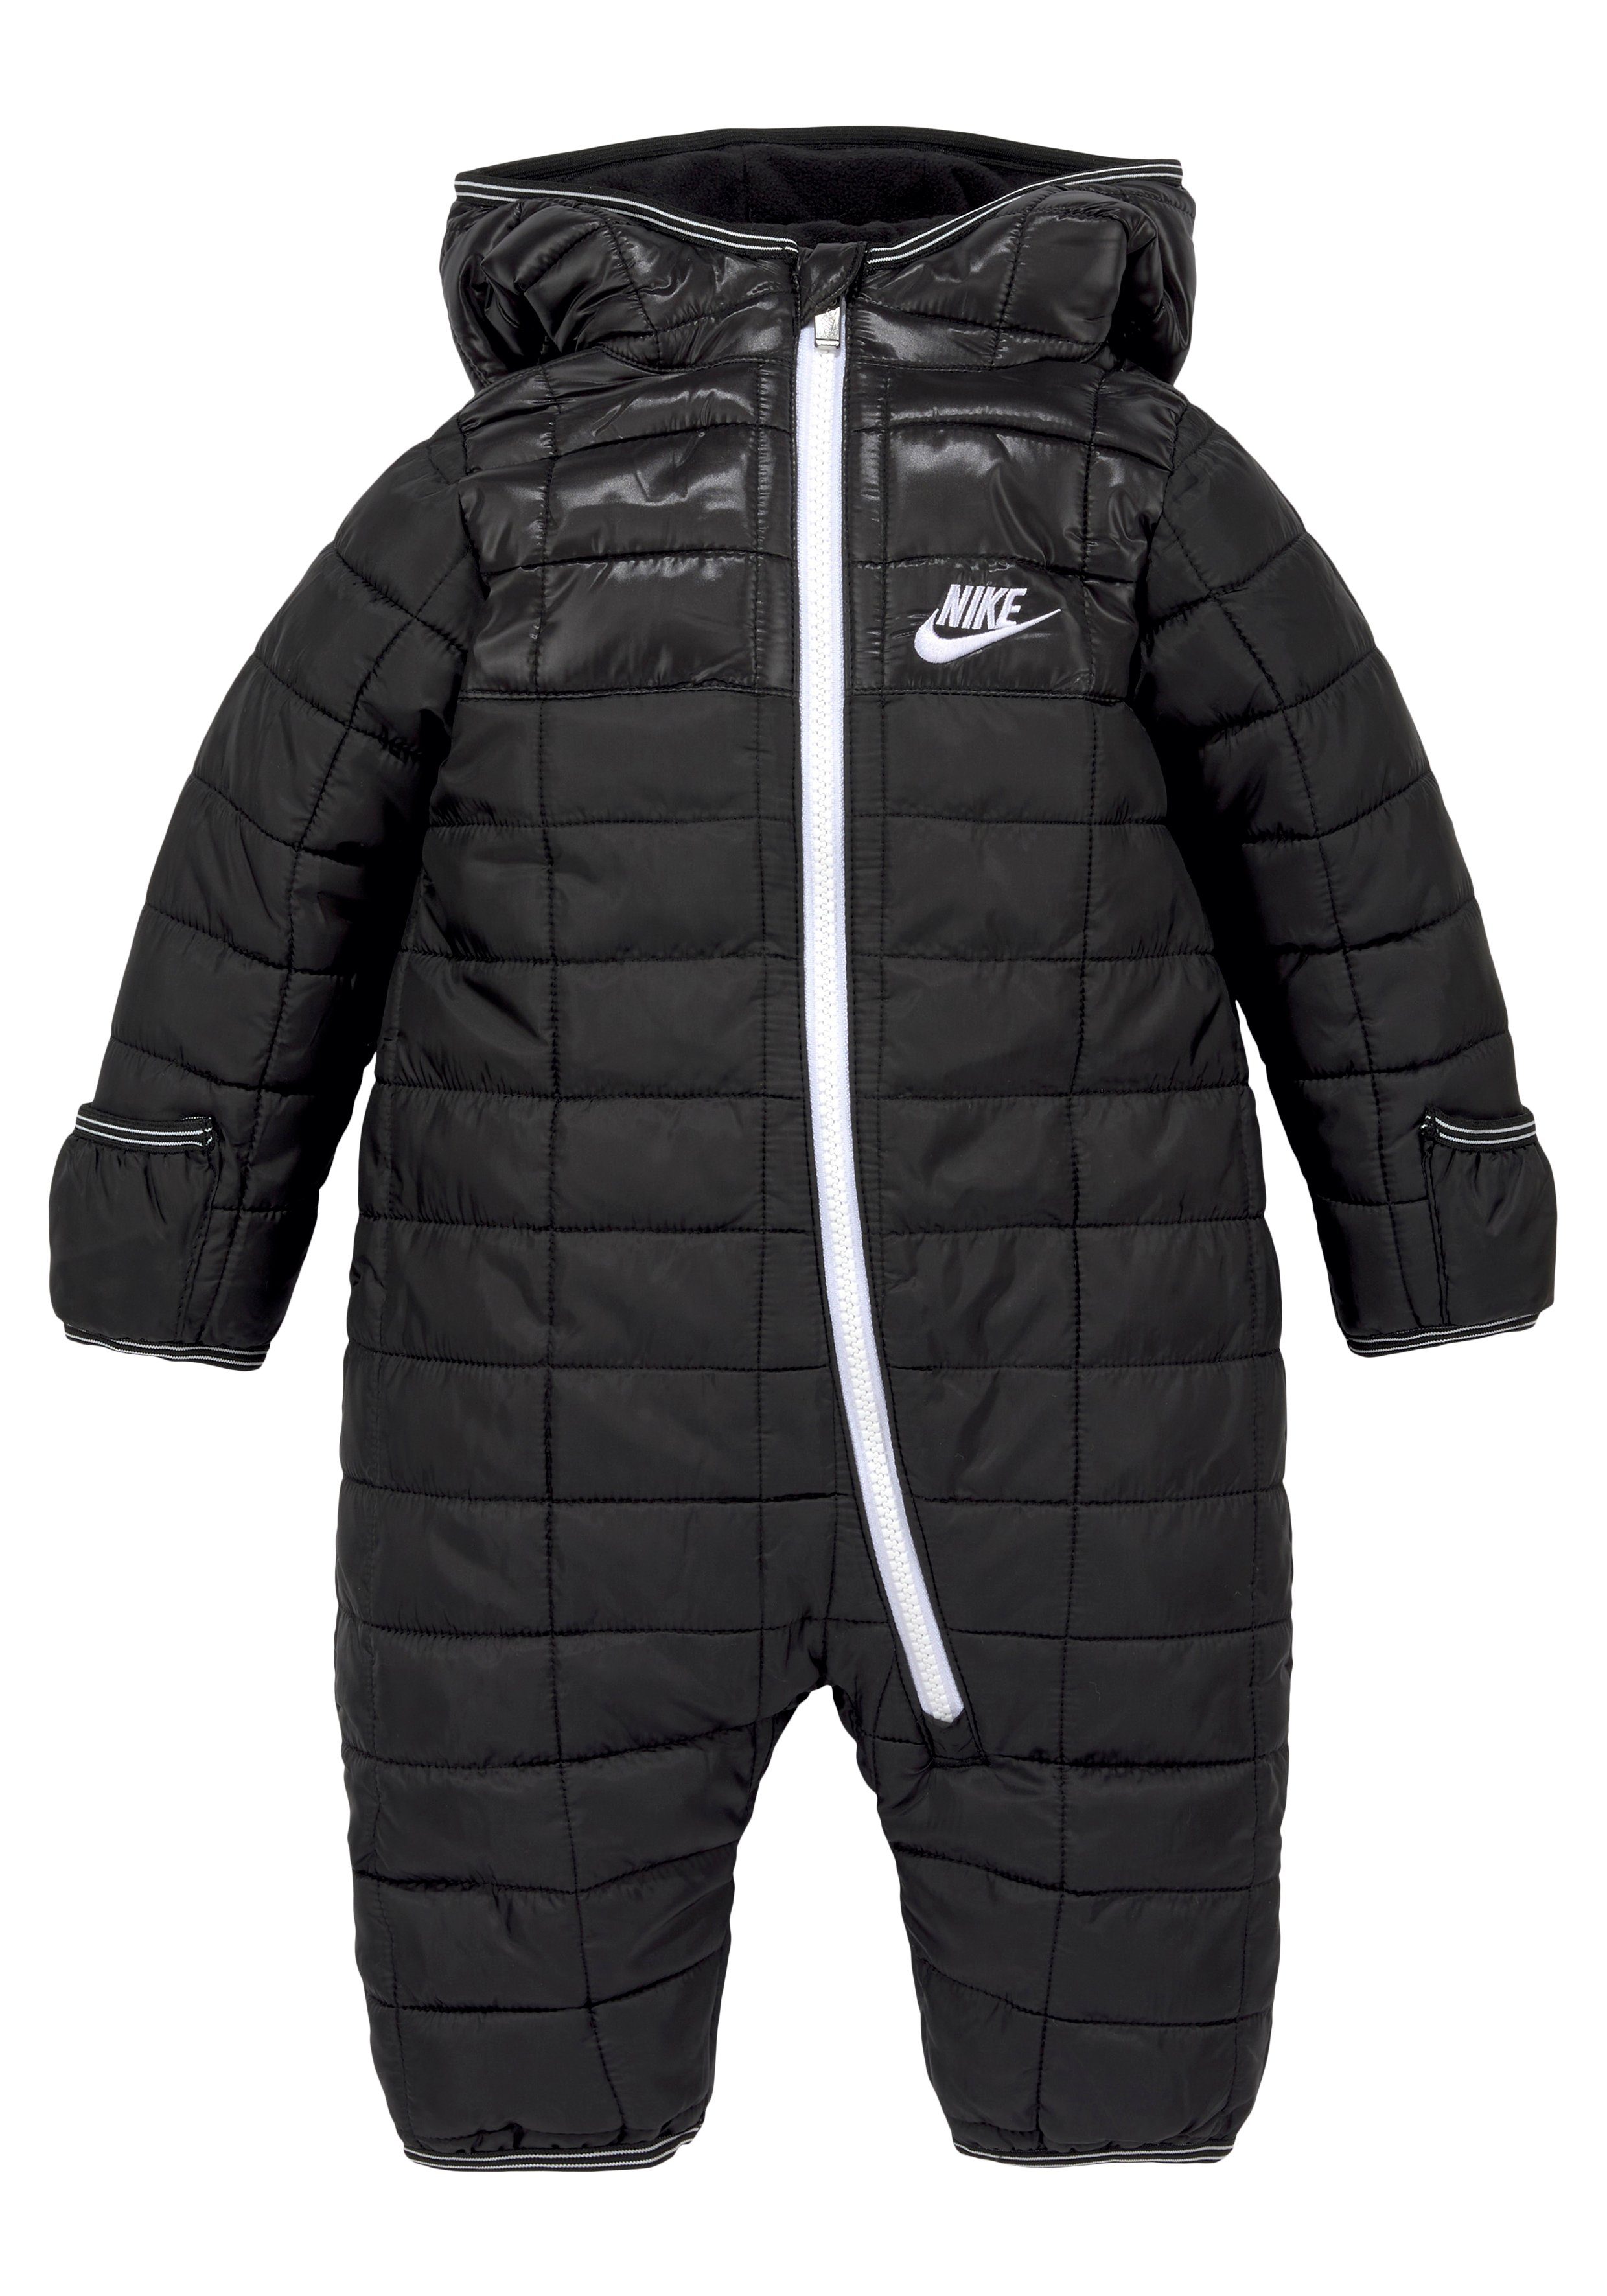 Nike Sportswear schwarz COLORBLOCK Schneeoverall SNOWSUIT